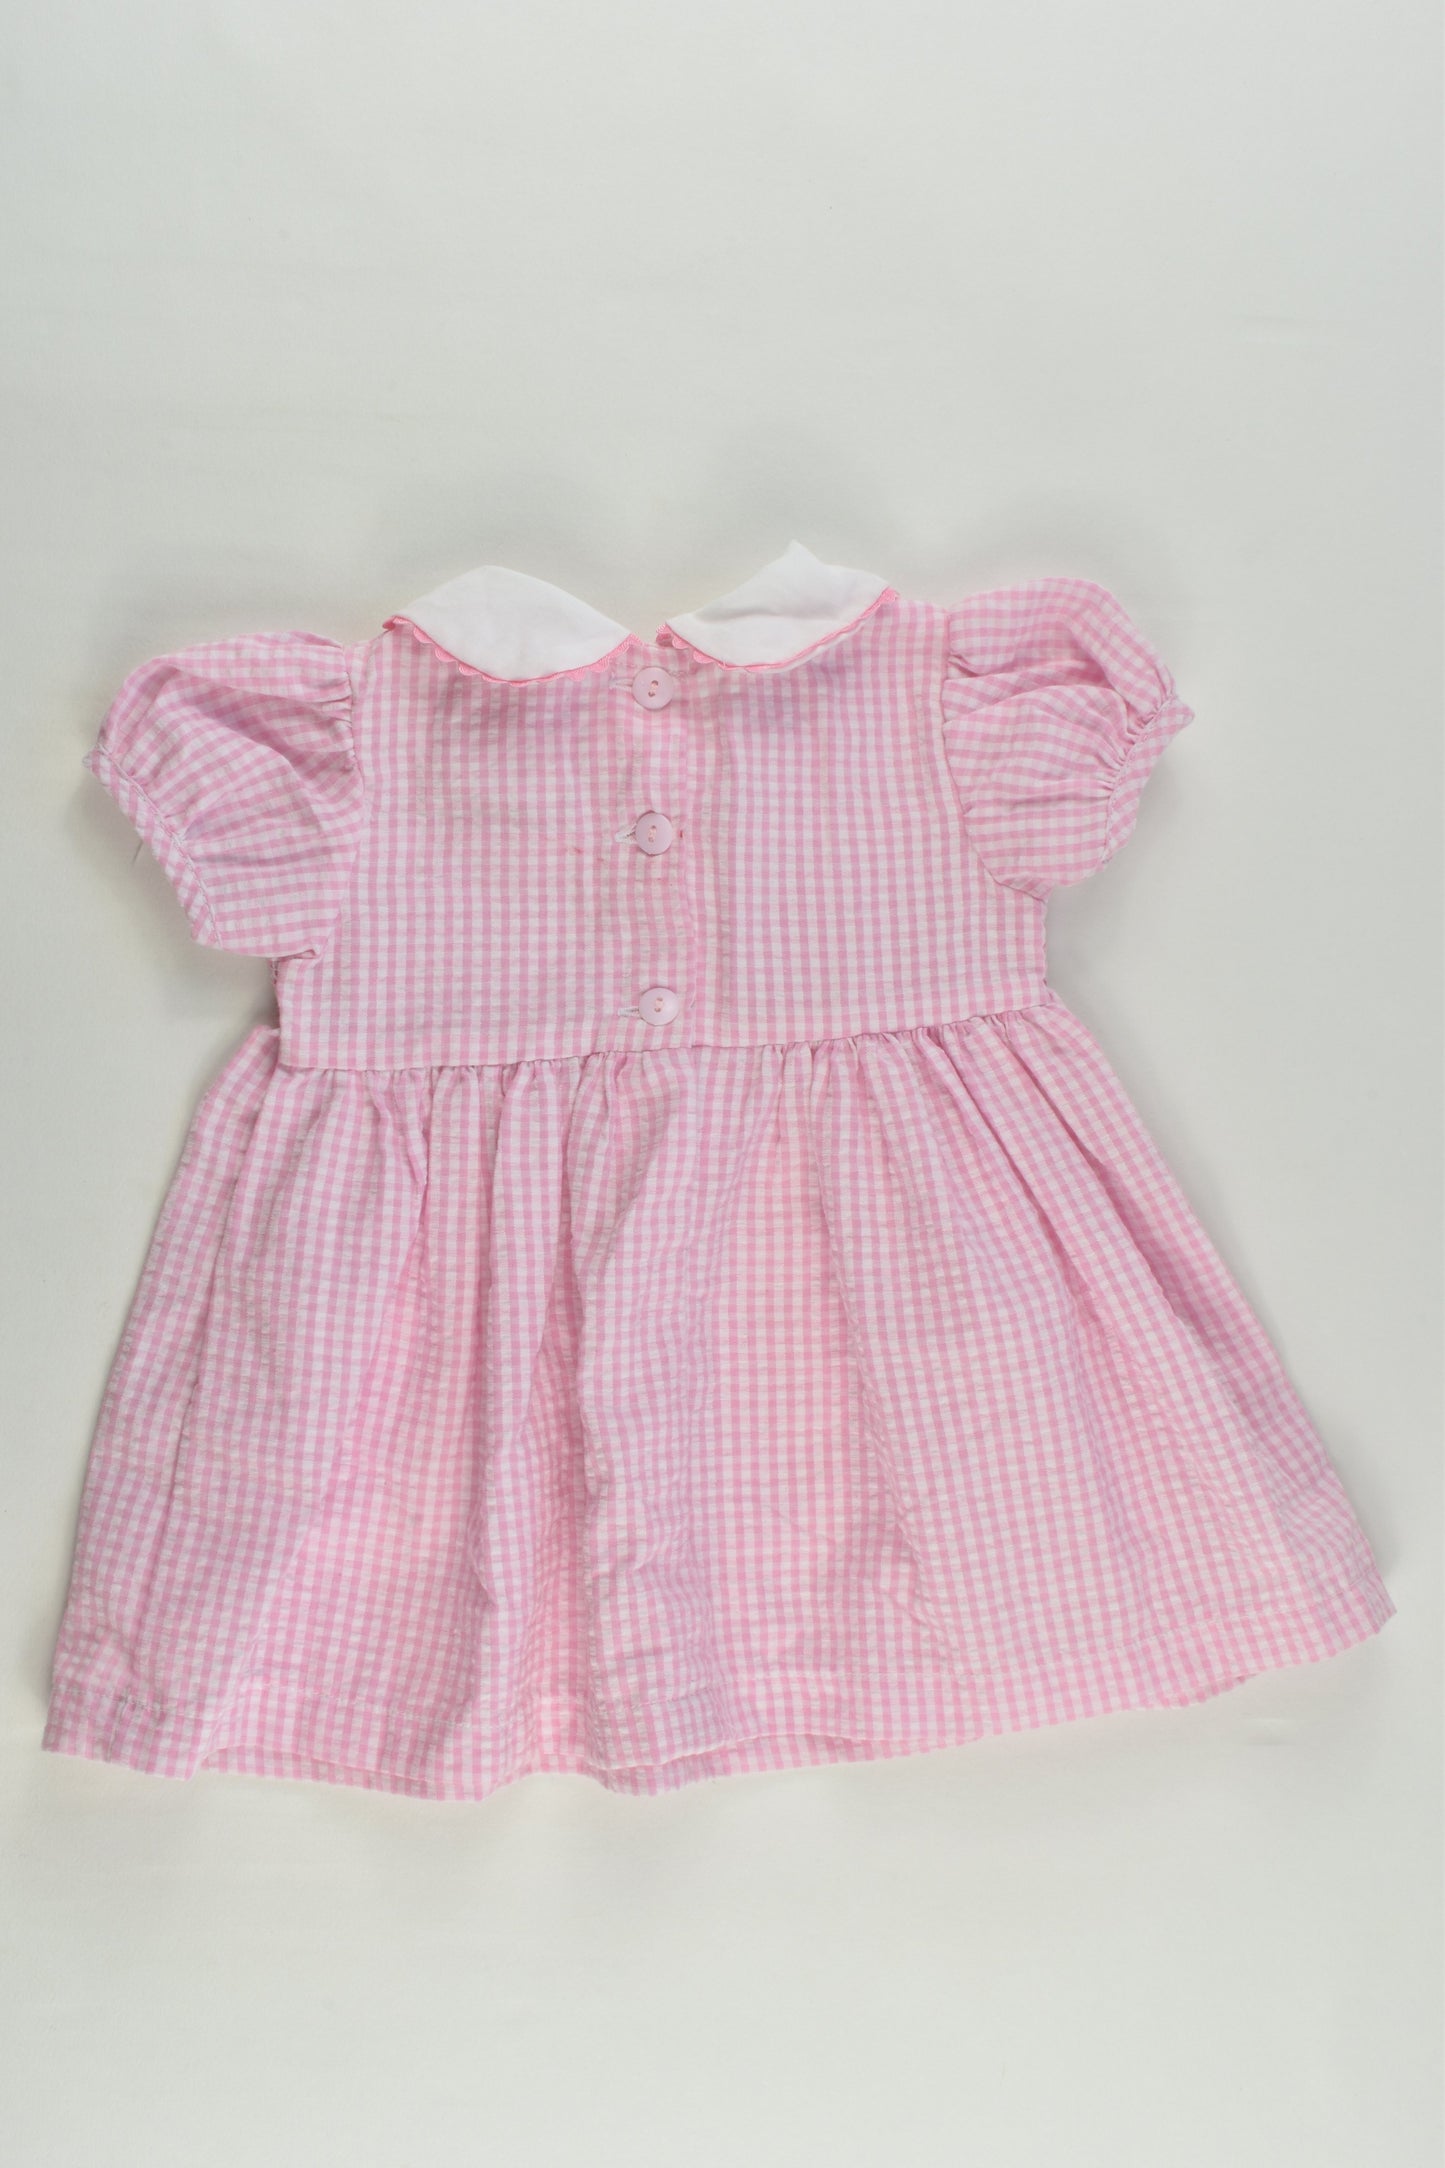 Rock A Bye Baby Size 00 (3/6 months) Smocked Dress